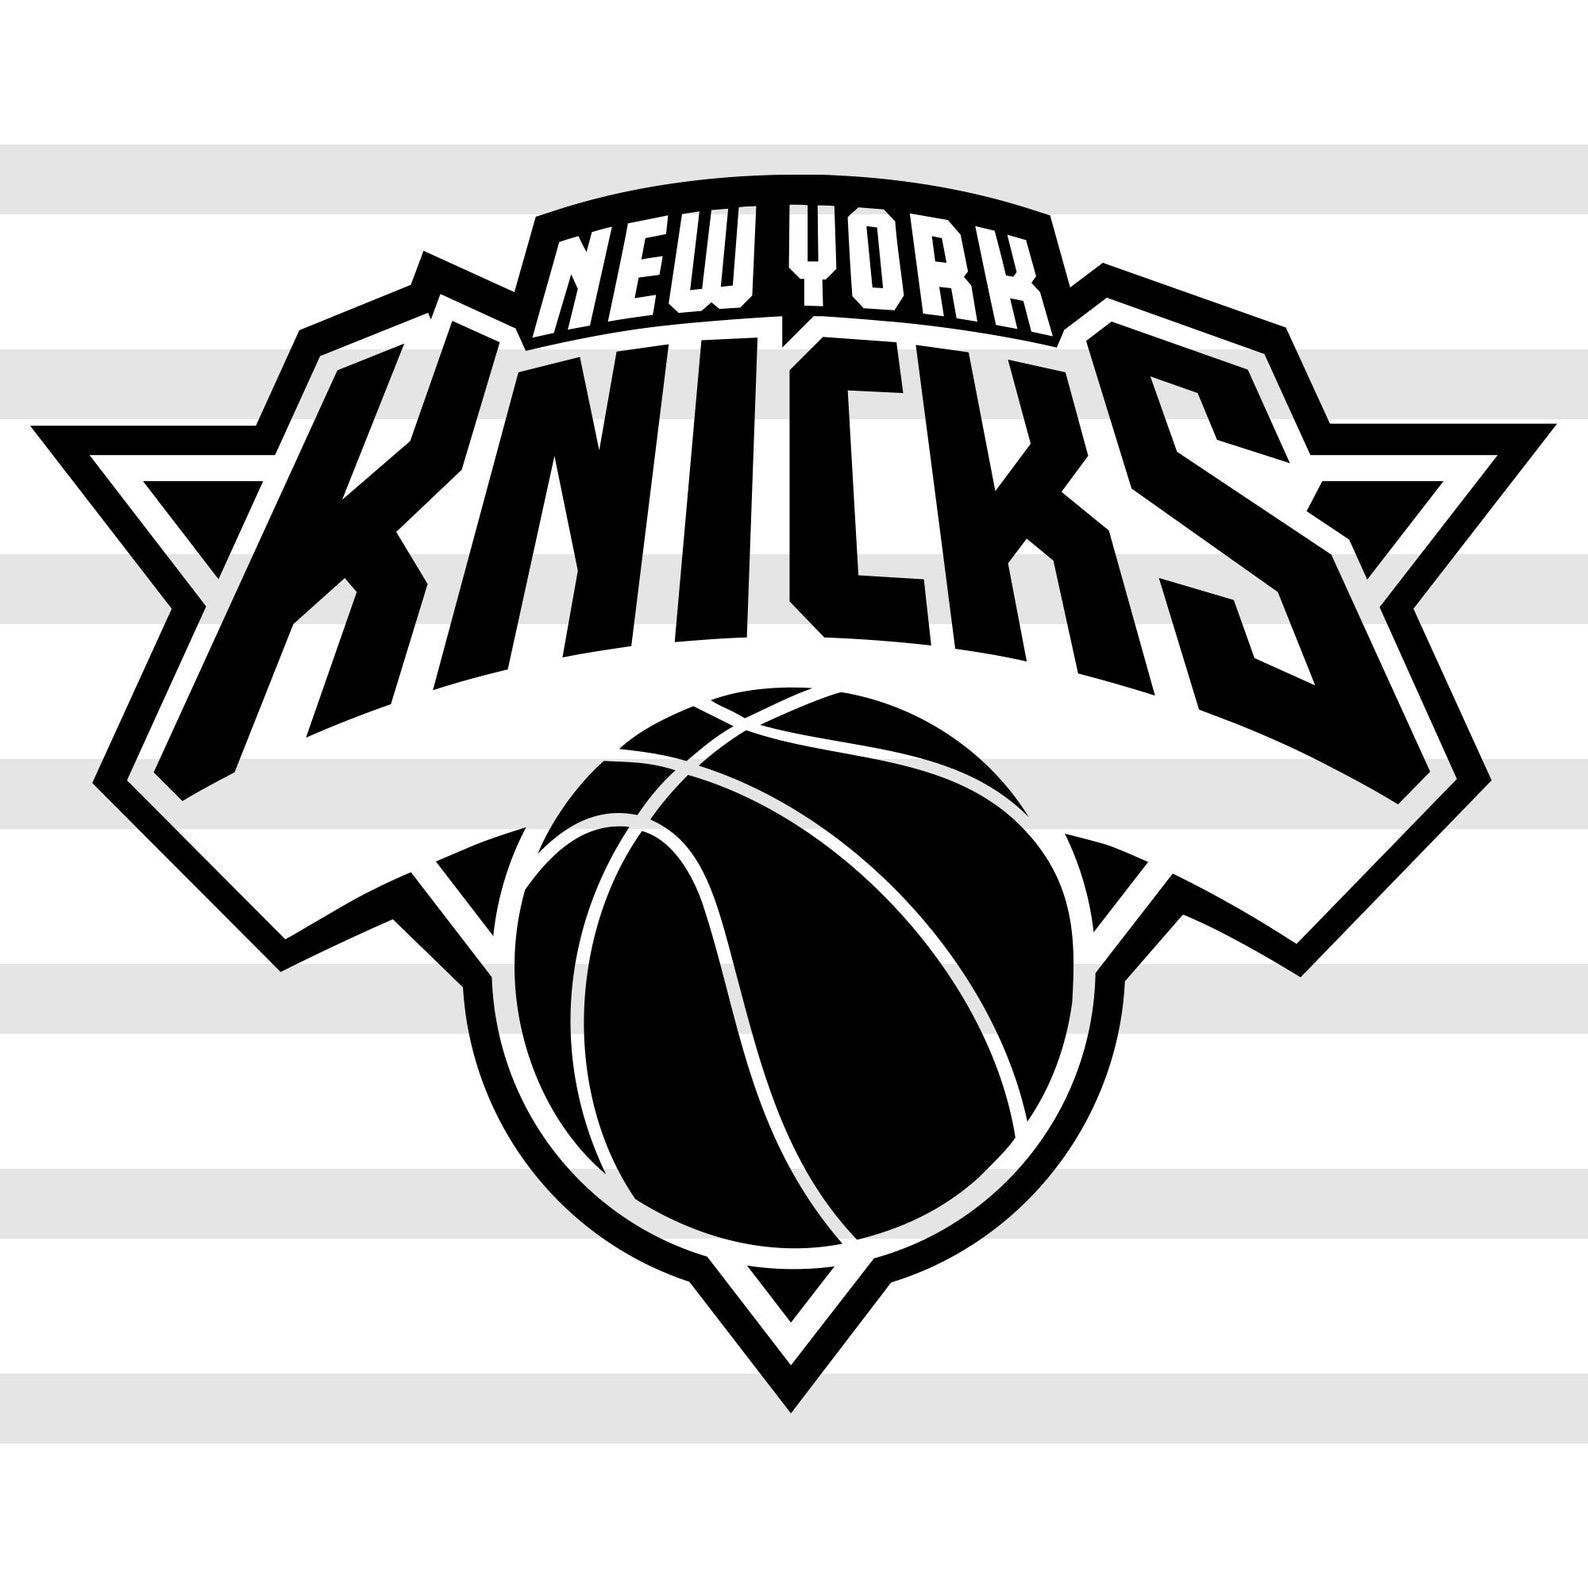 New York Knicks Black and White logo svg basketball NBA | Etsy